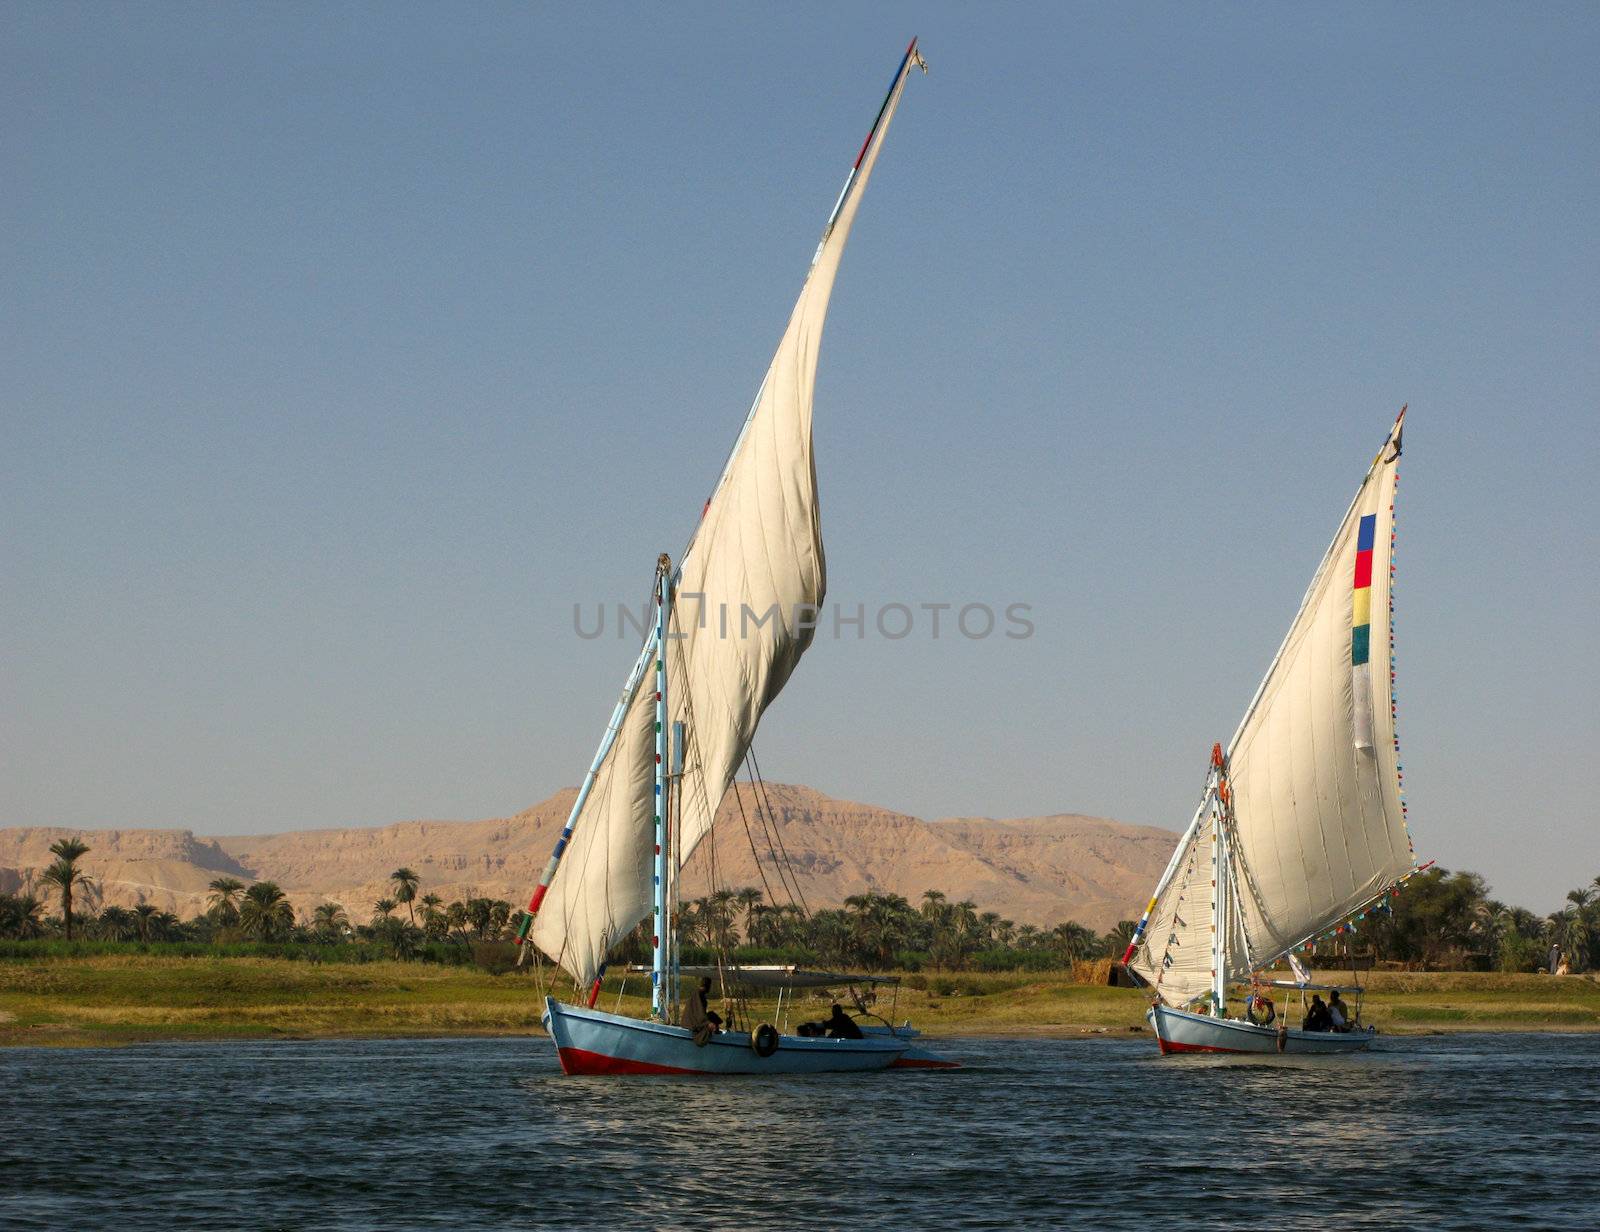 Fishing on Nile by palinchak